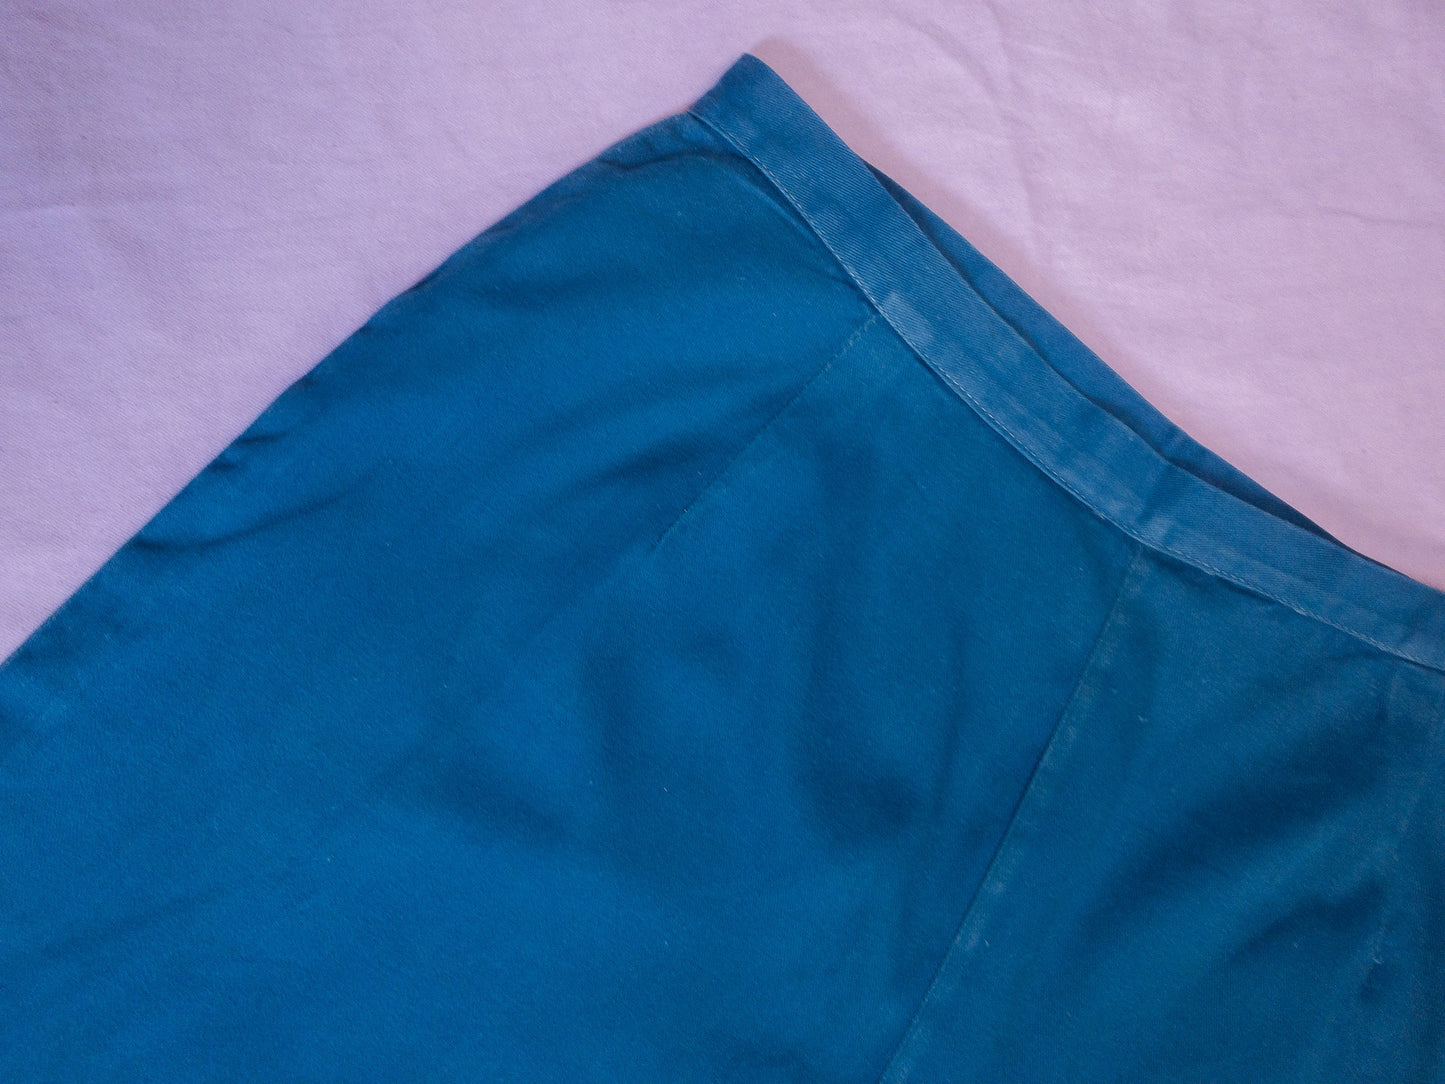 50s 60s Rich Blue Shorts | 30" | High Waist Pin Up Bermuda